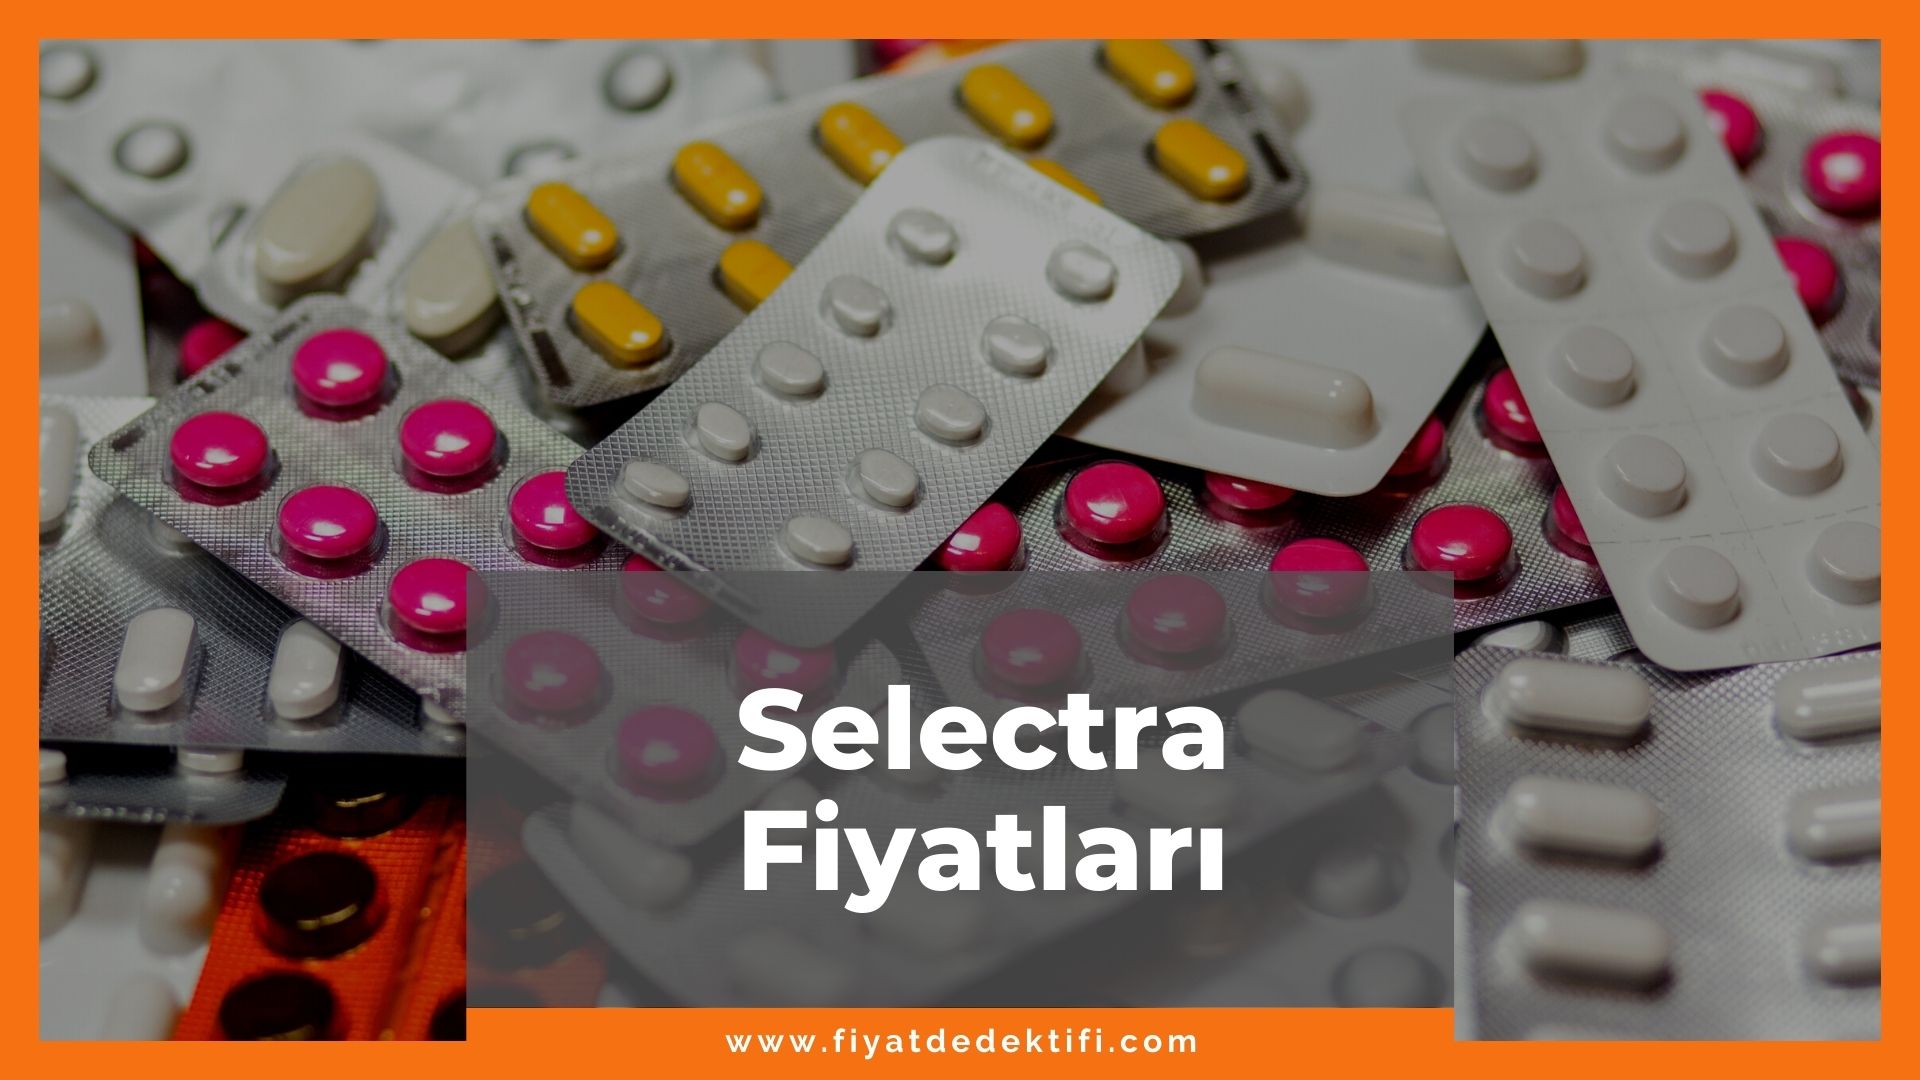 Selectra Fiyat 2021, Selectra 25 mg, 50 mg, 100 mg Fiyatı, selectra zamlandı mı, selectra zamlı fiyatı ne kadar kaç tl oldu